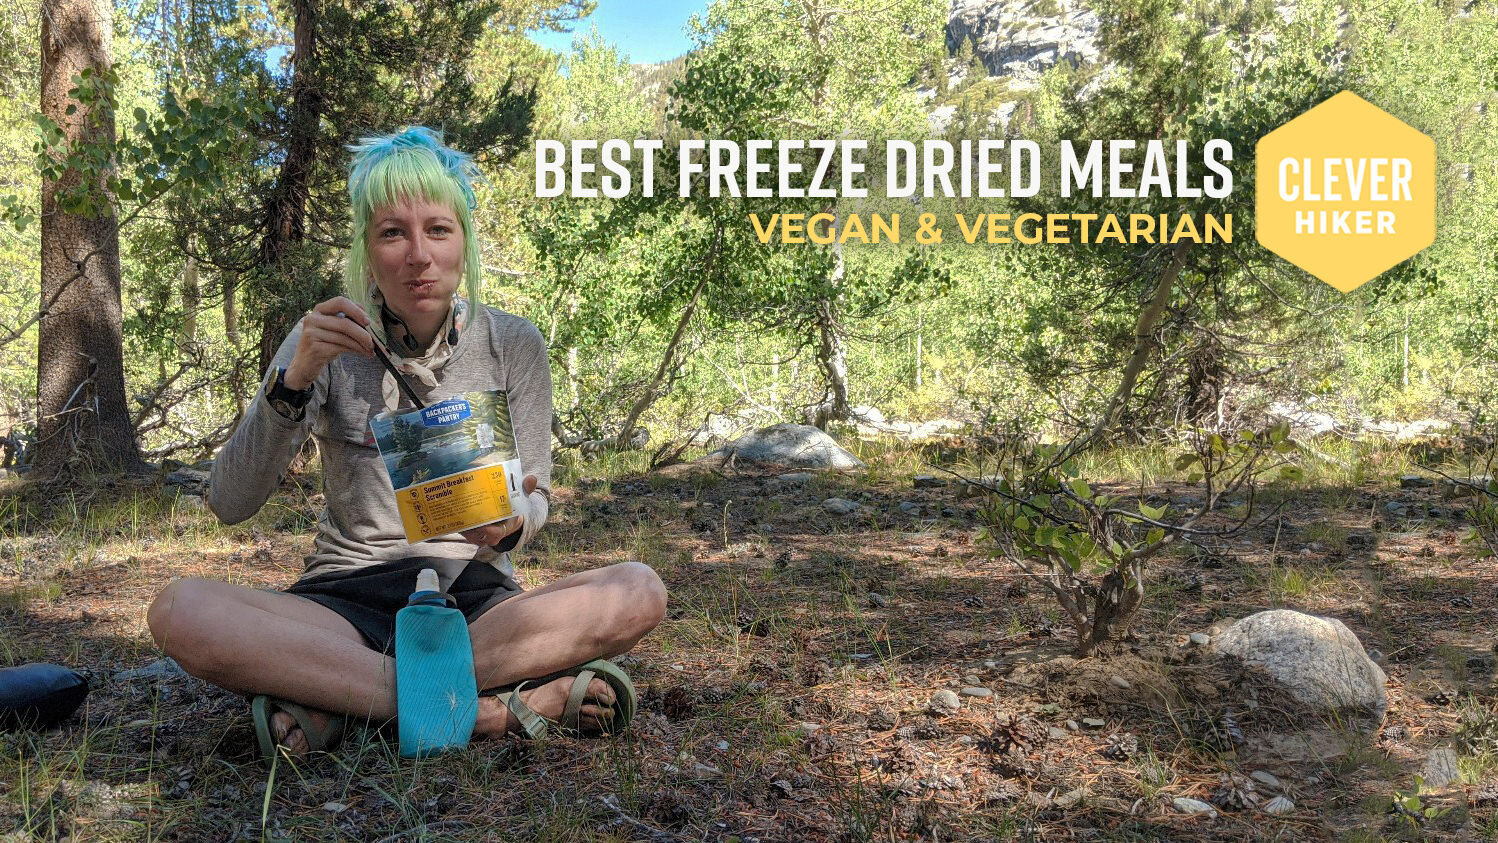 Best Vegan and Vegetarian Freeze-Dried Meals